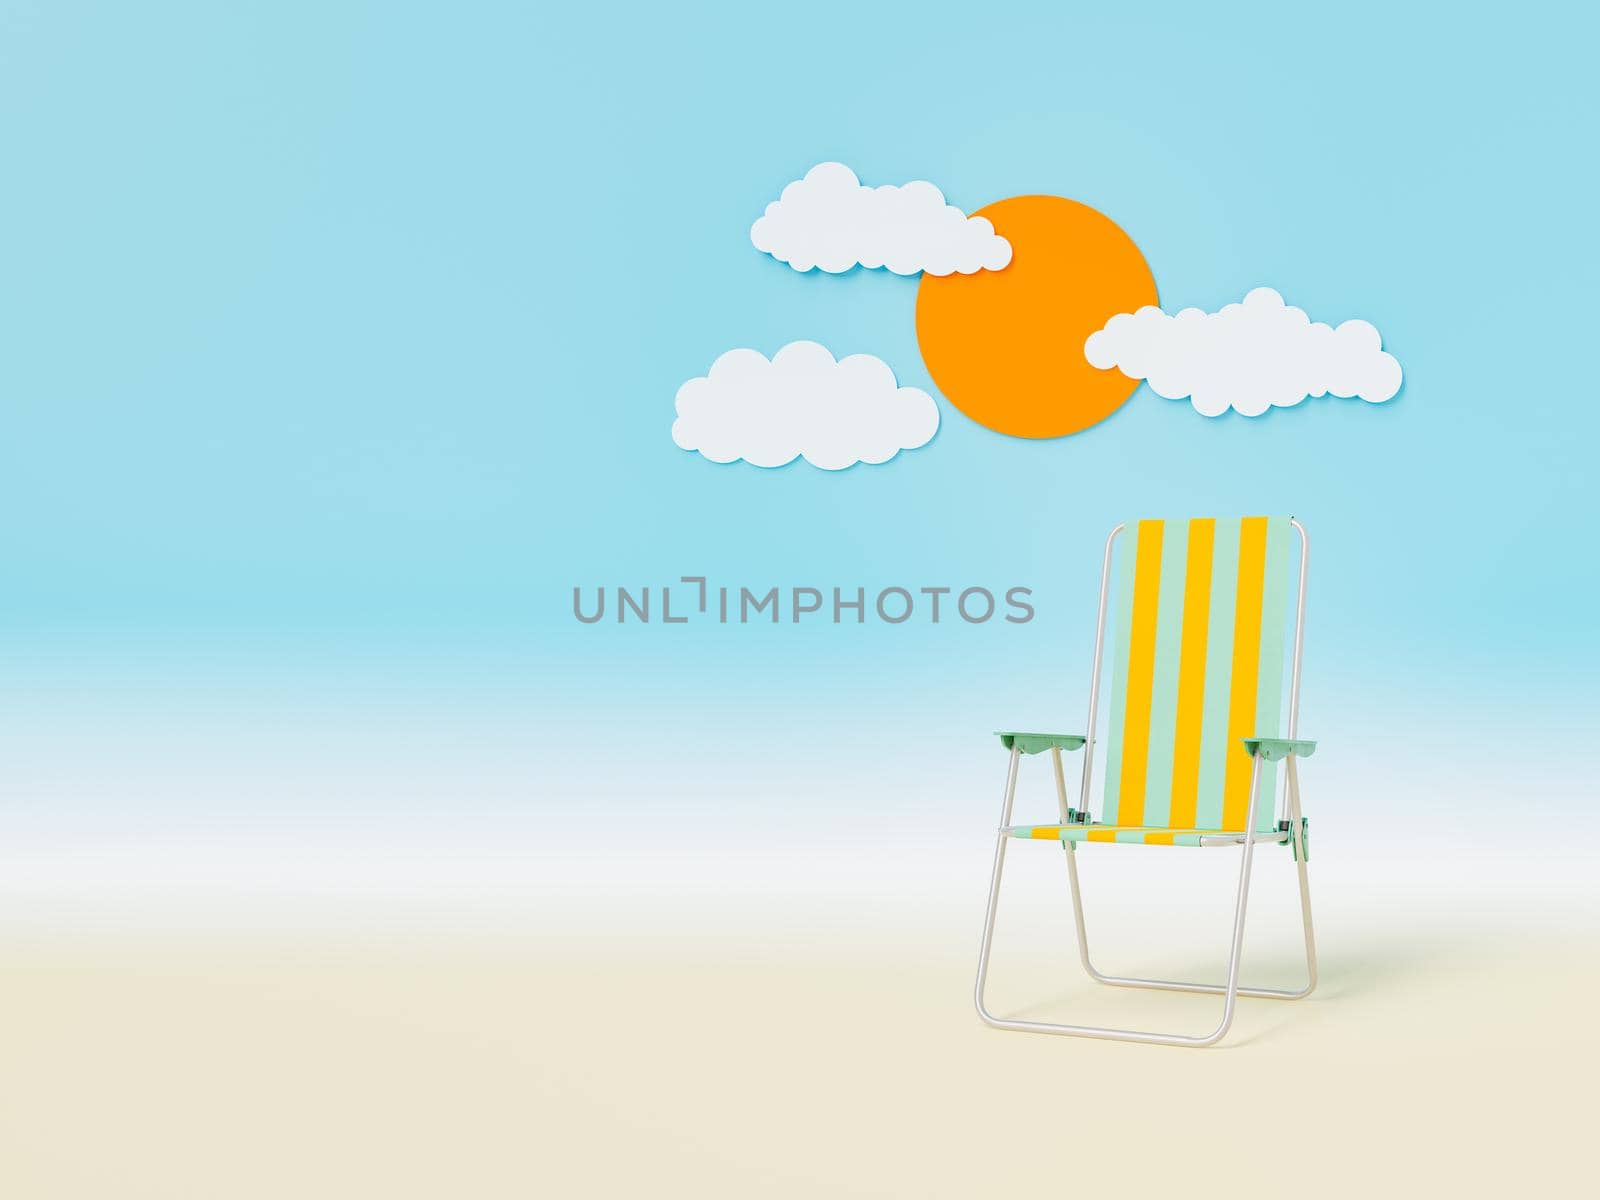 Deckchair under sun and clouds on beach by asolano